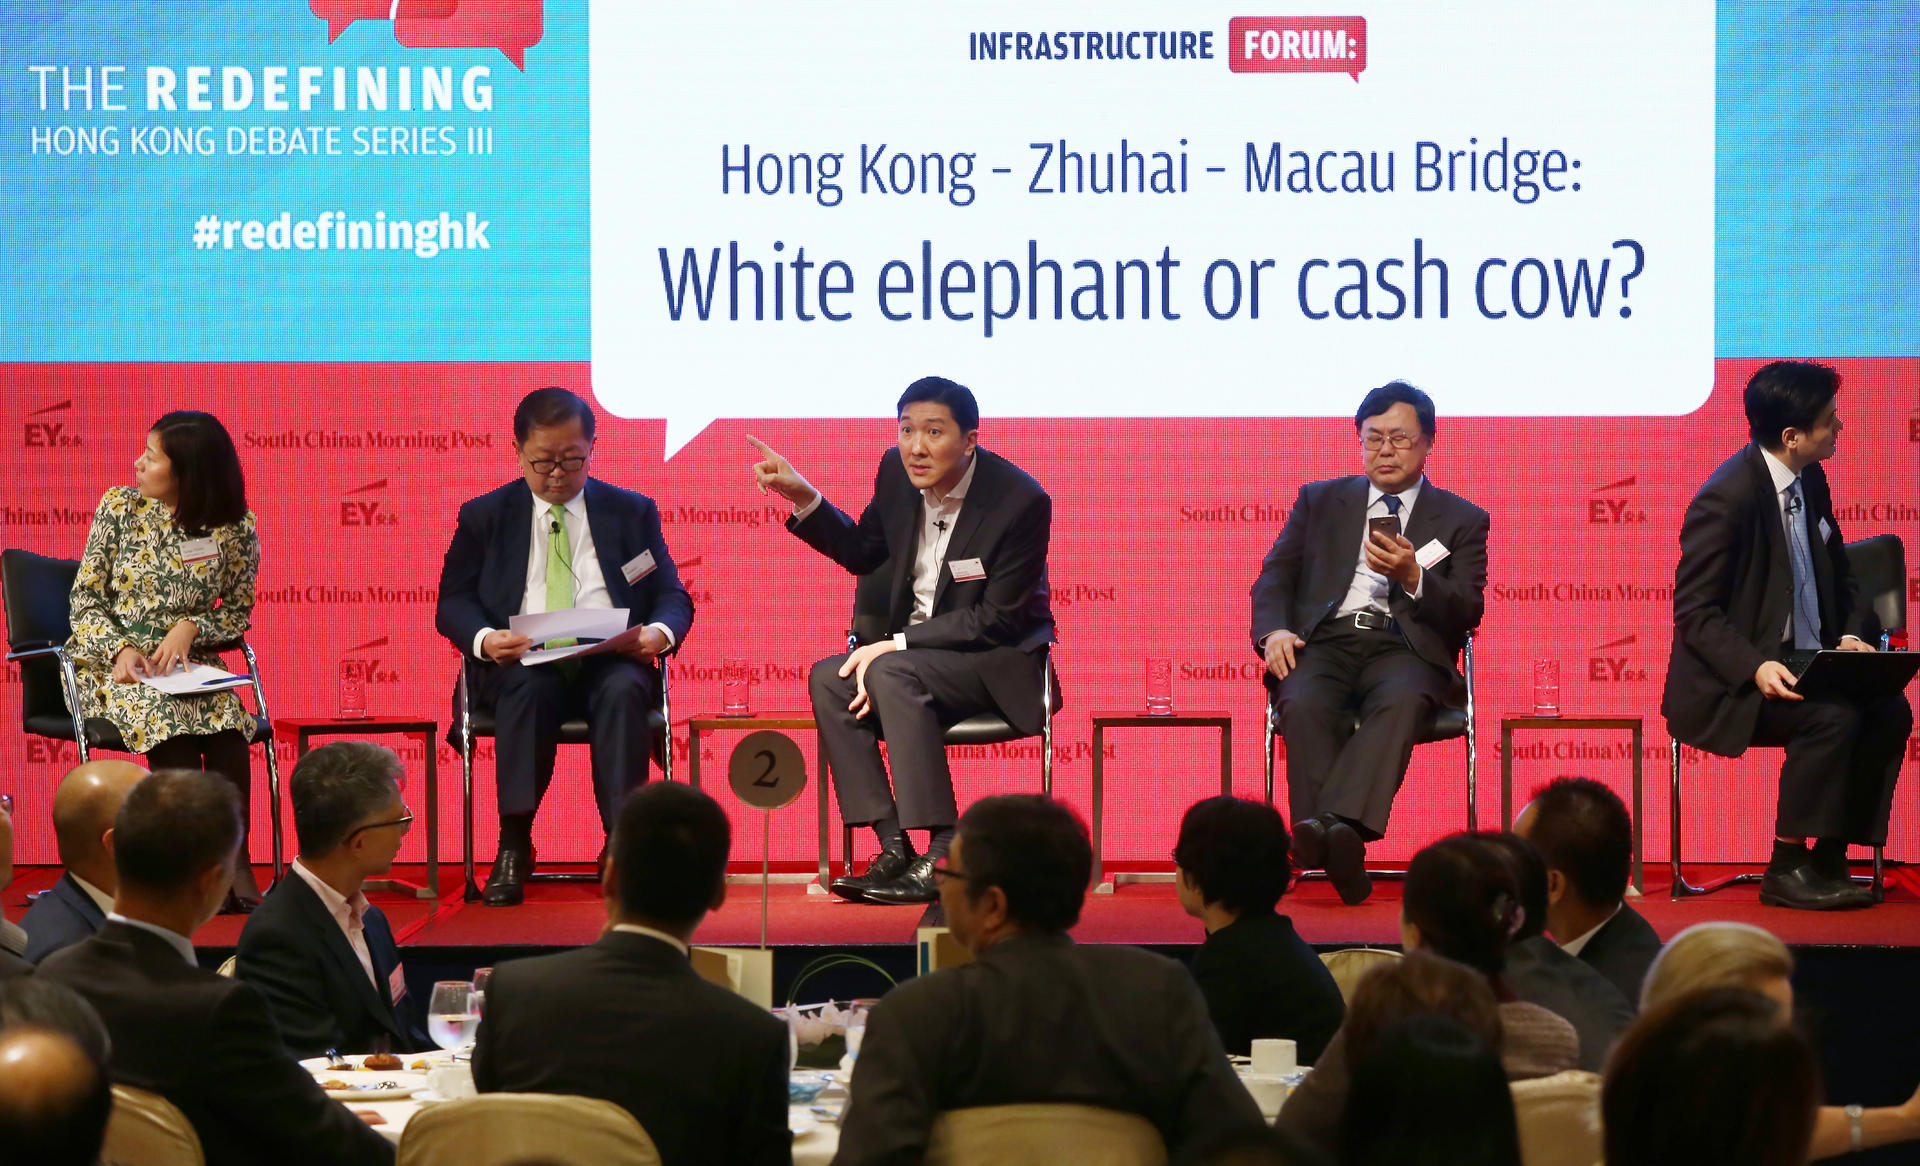 Panel members at yesterday's debate on the pros and cons of the Hong Kong-Zhuhai-Macau bridge project.Photo: Jonathan Wong